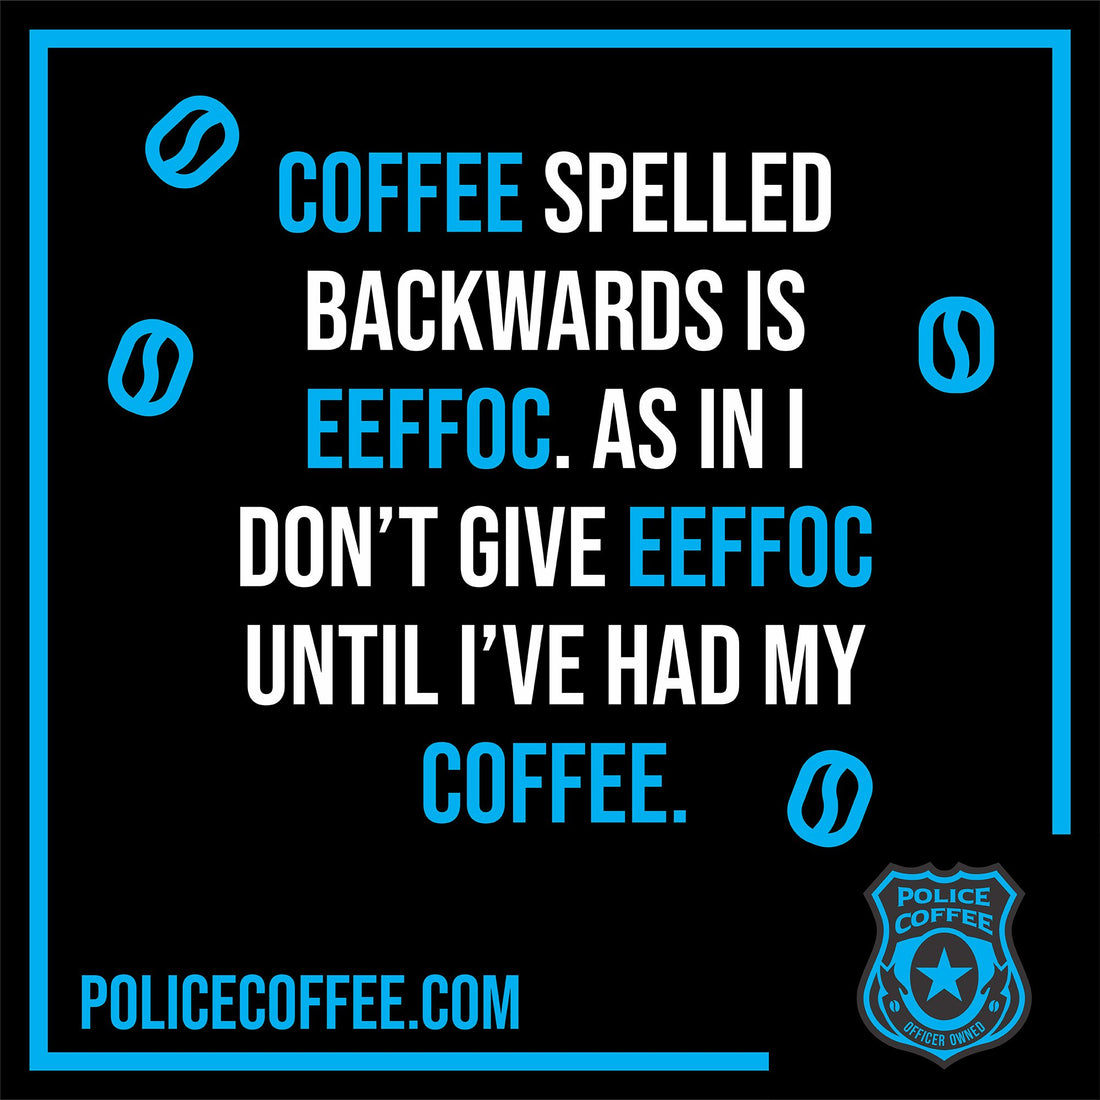 Funny Police Coffee Memes! - Police Coffee Company